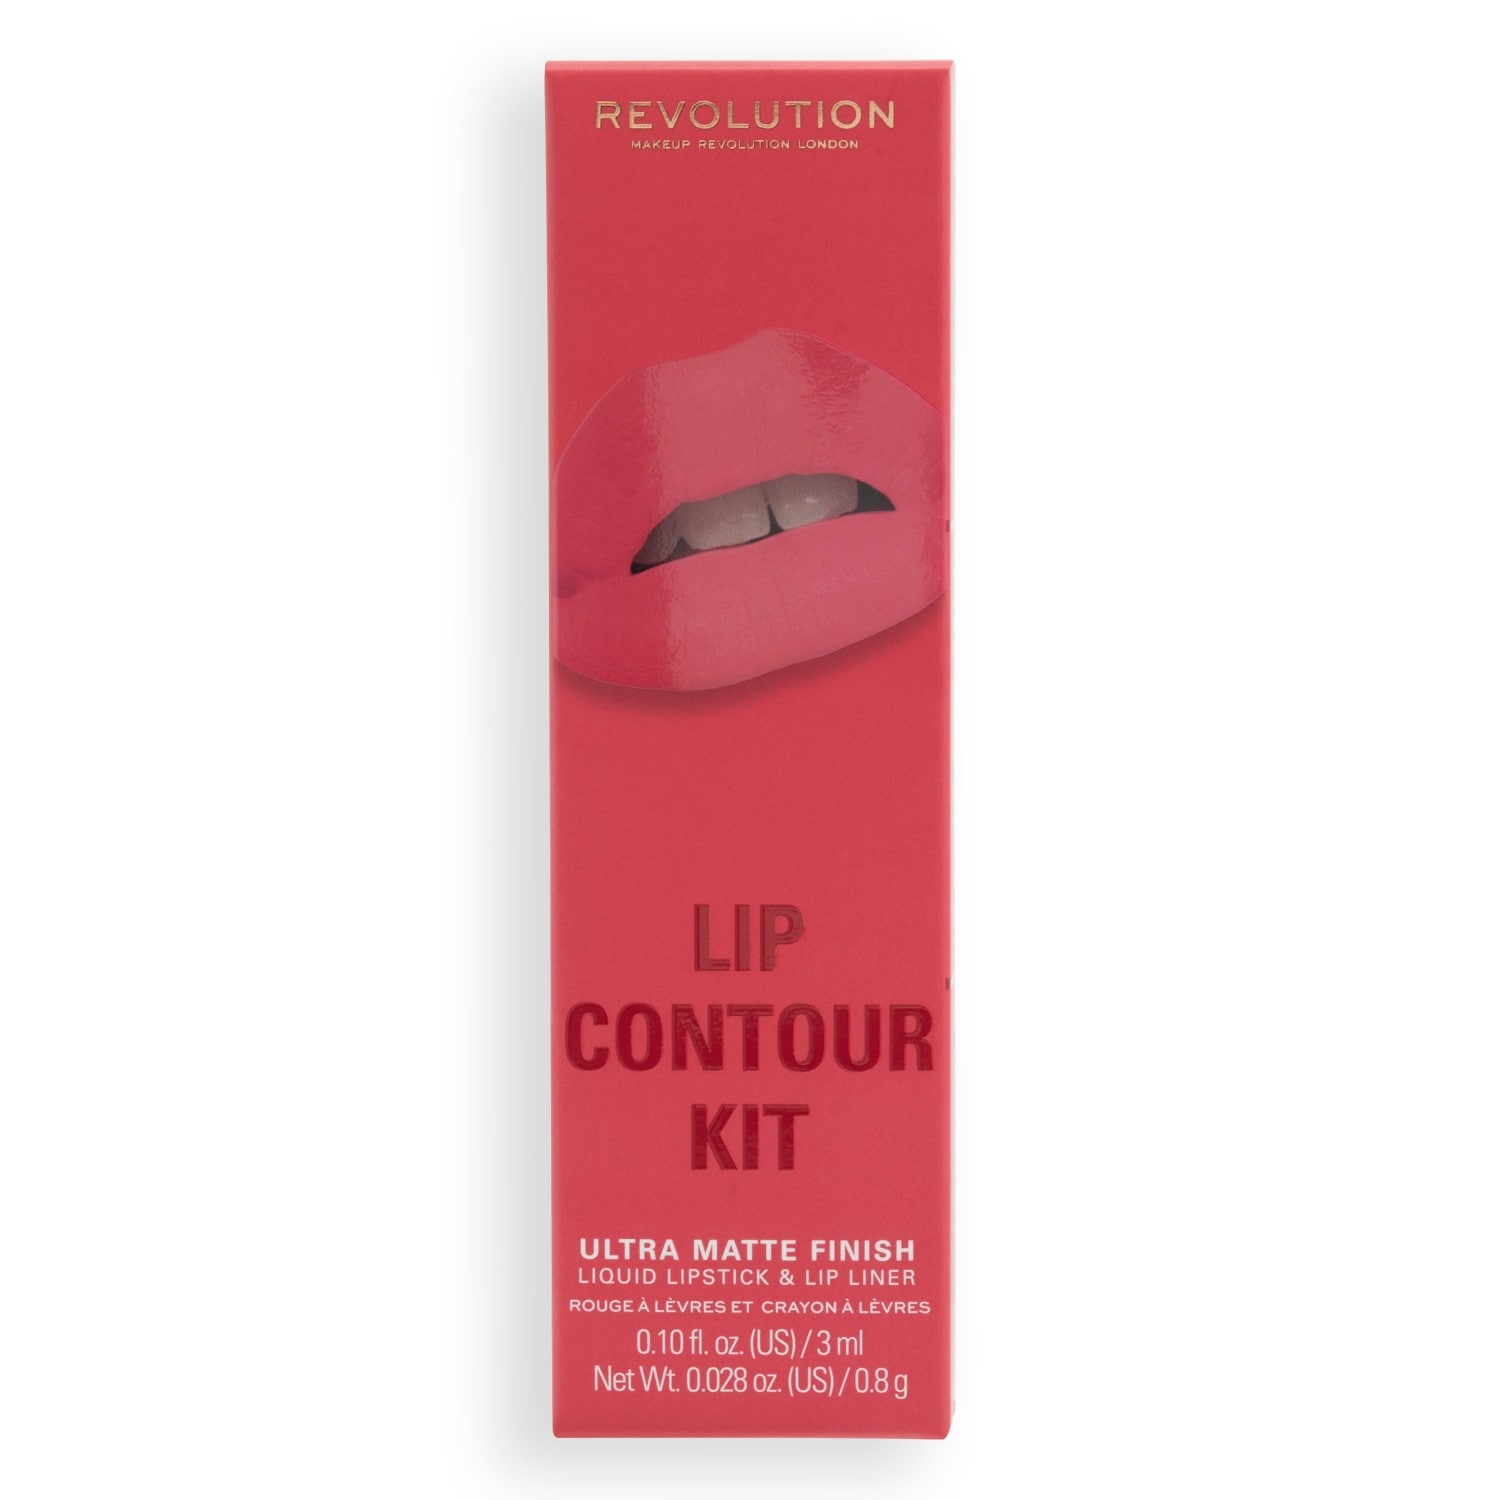 Lip Contour Kit